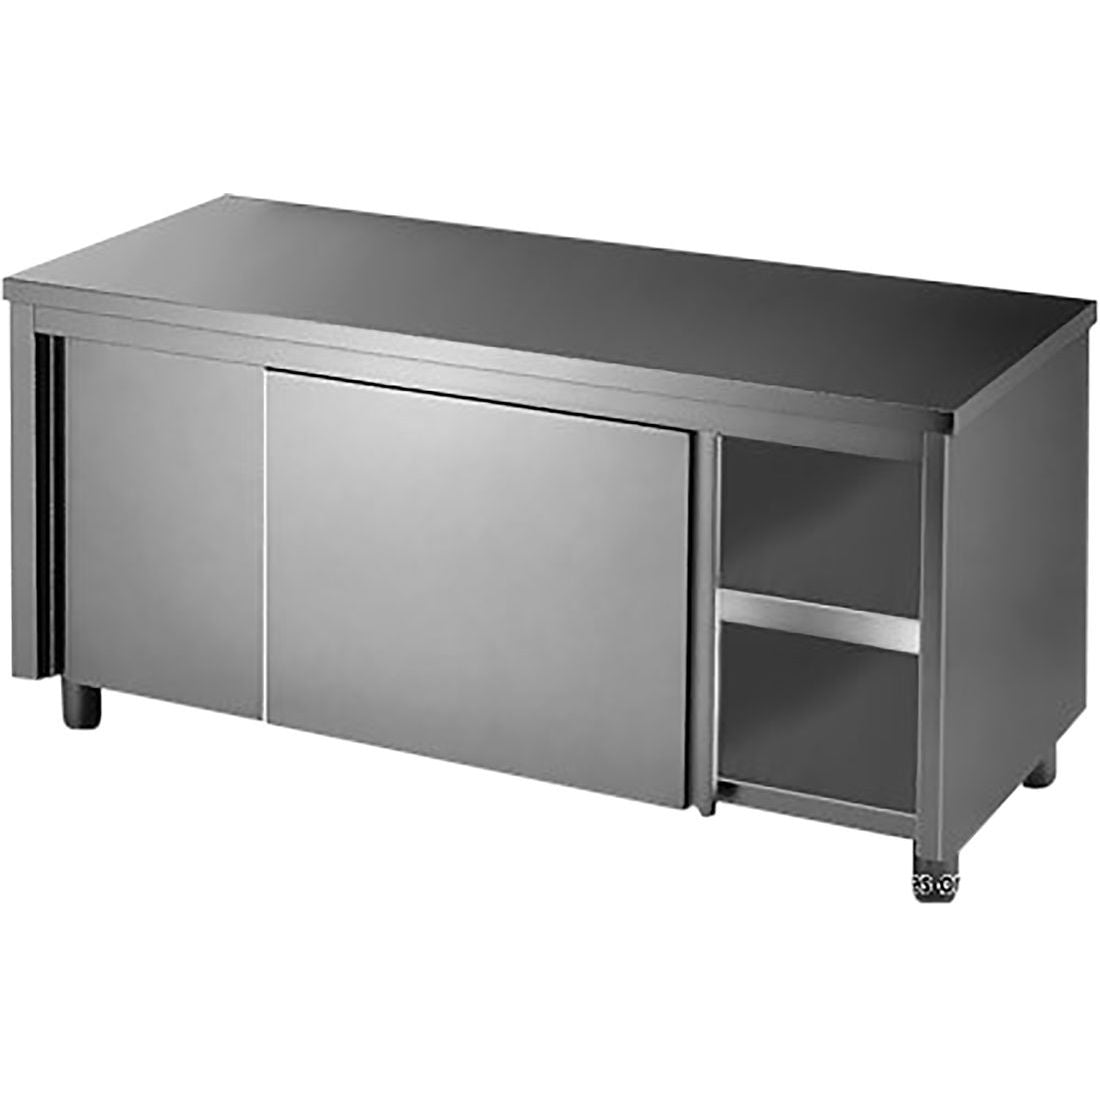 DTHT6-1200-H Kitchen Tidy Workbench Cabinet